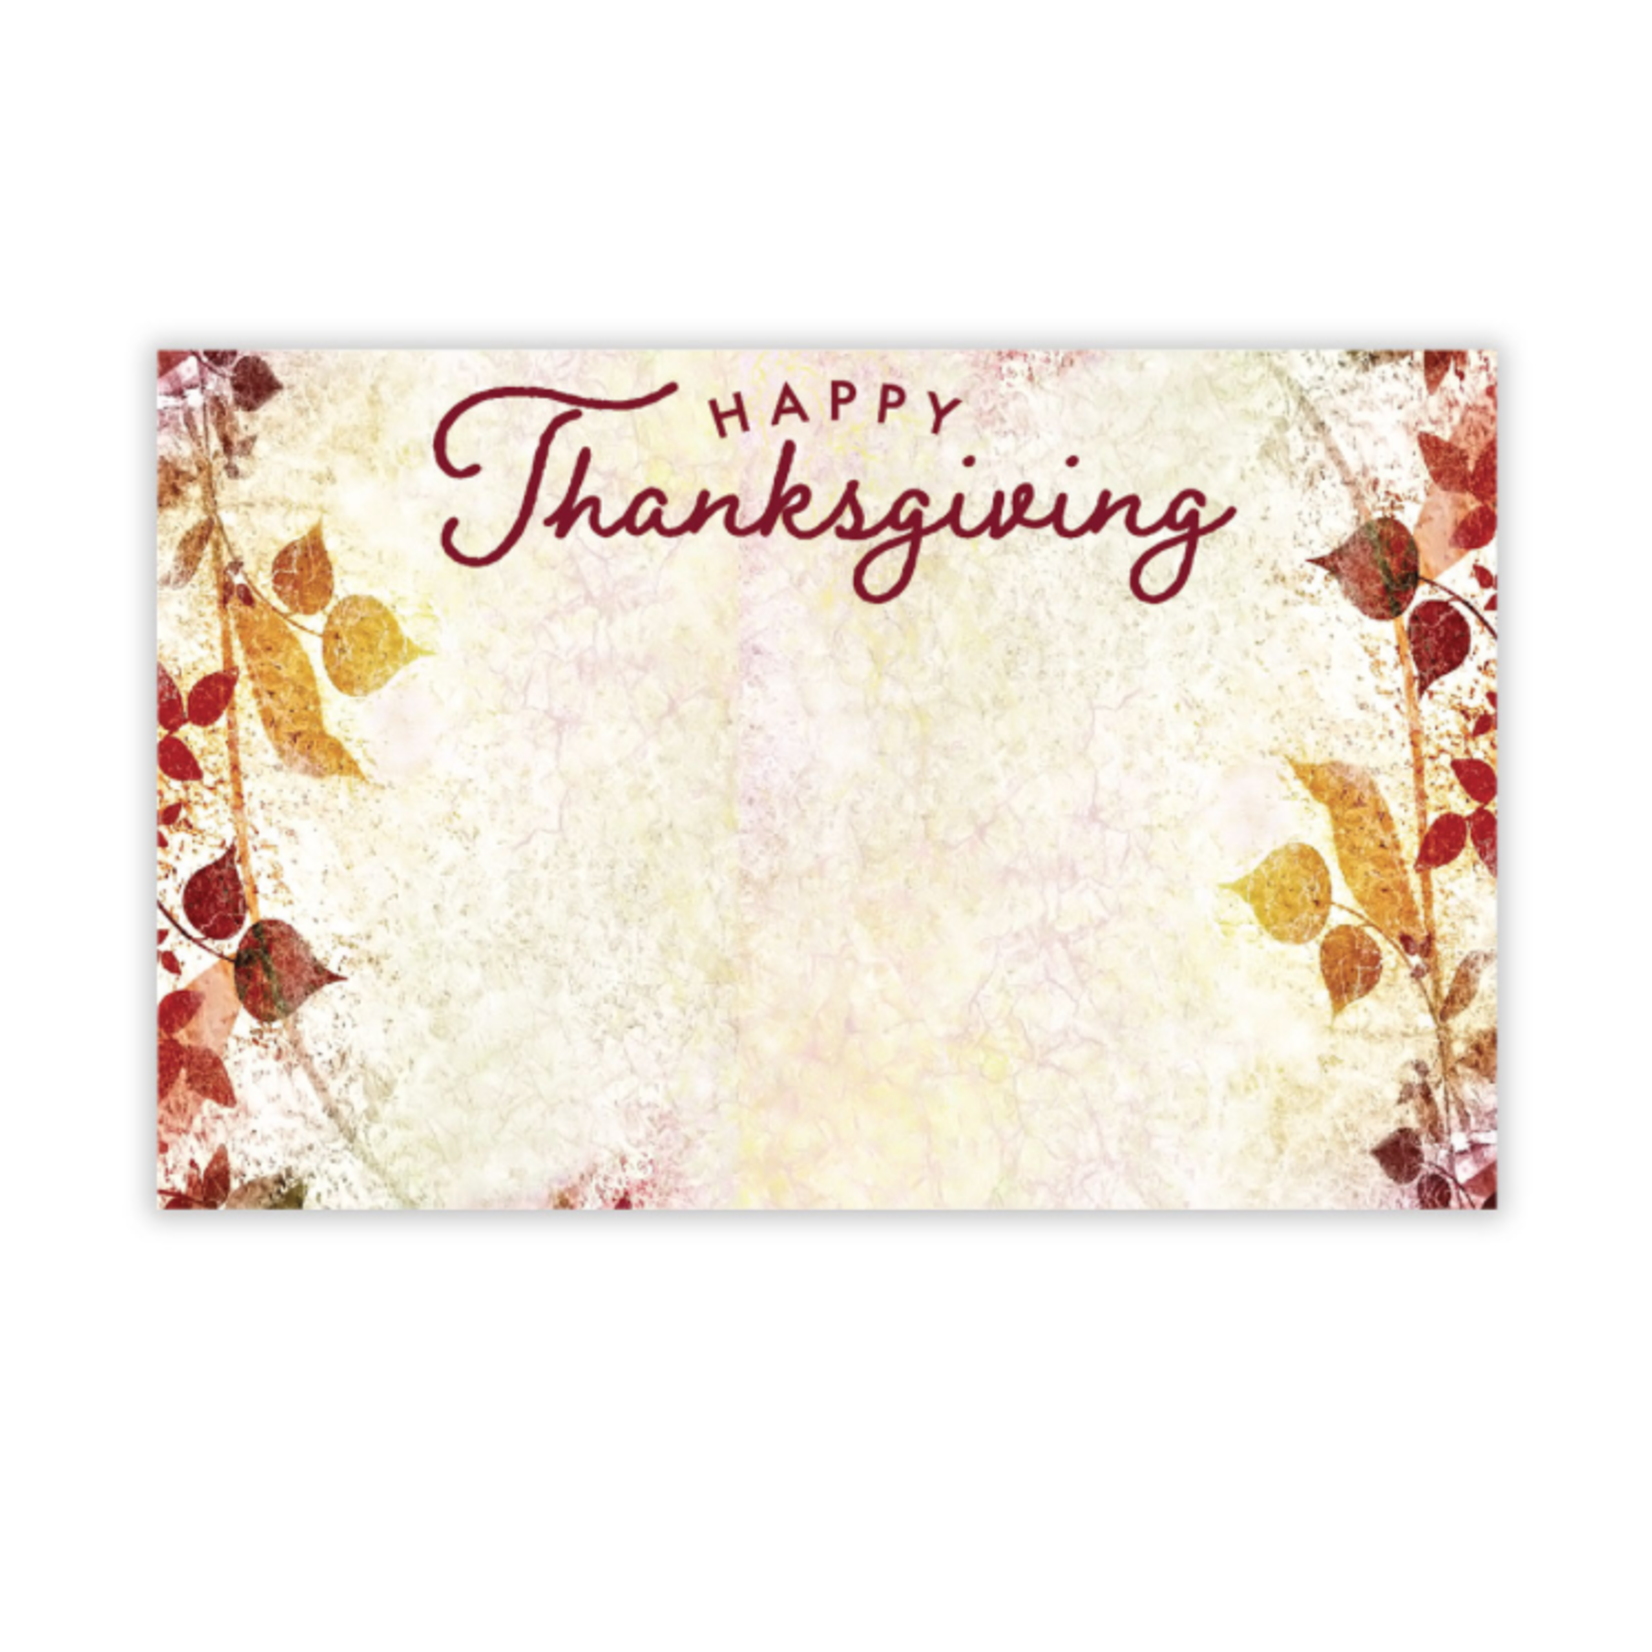 "HAPPY THANKSGIVING" CAPRI CARD